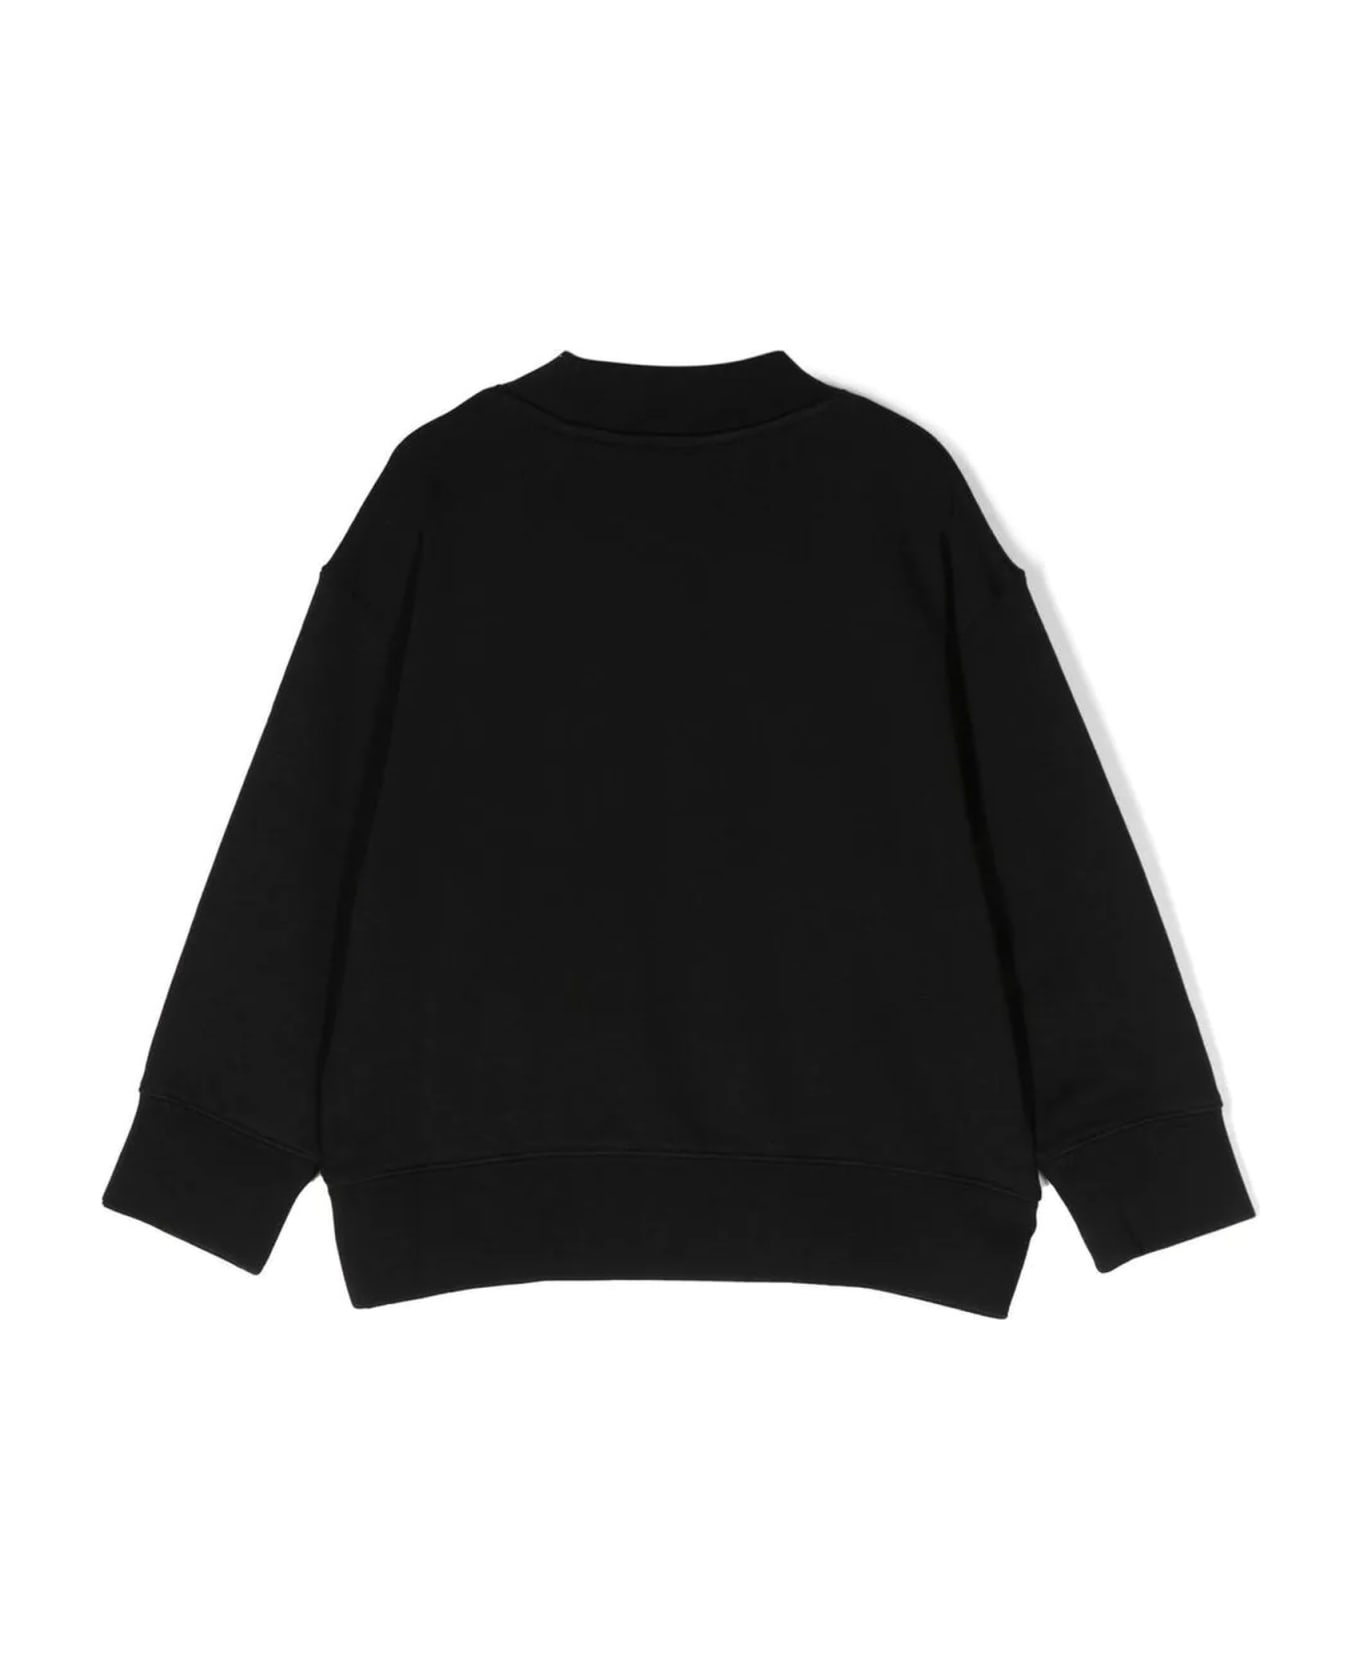 Palm Angels Black Cotton Sweatshirt - Black Whit